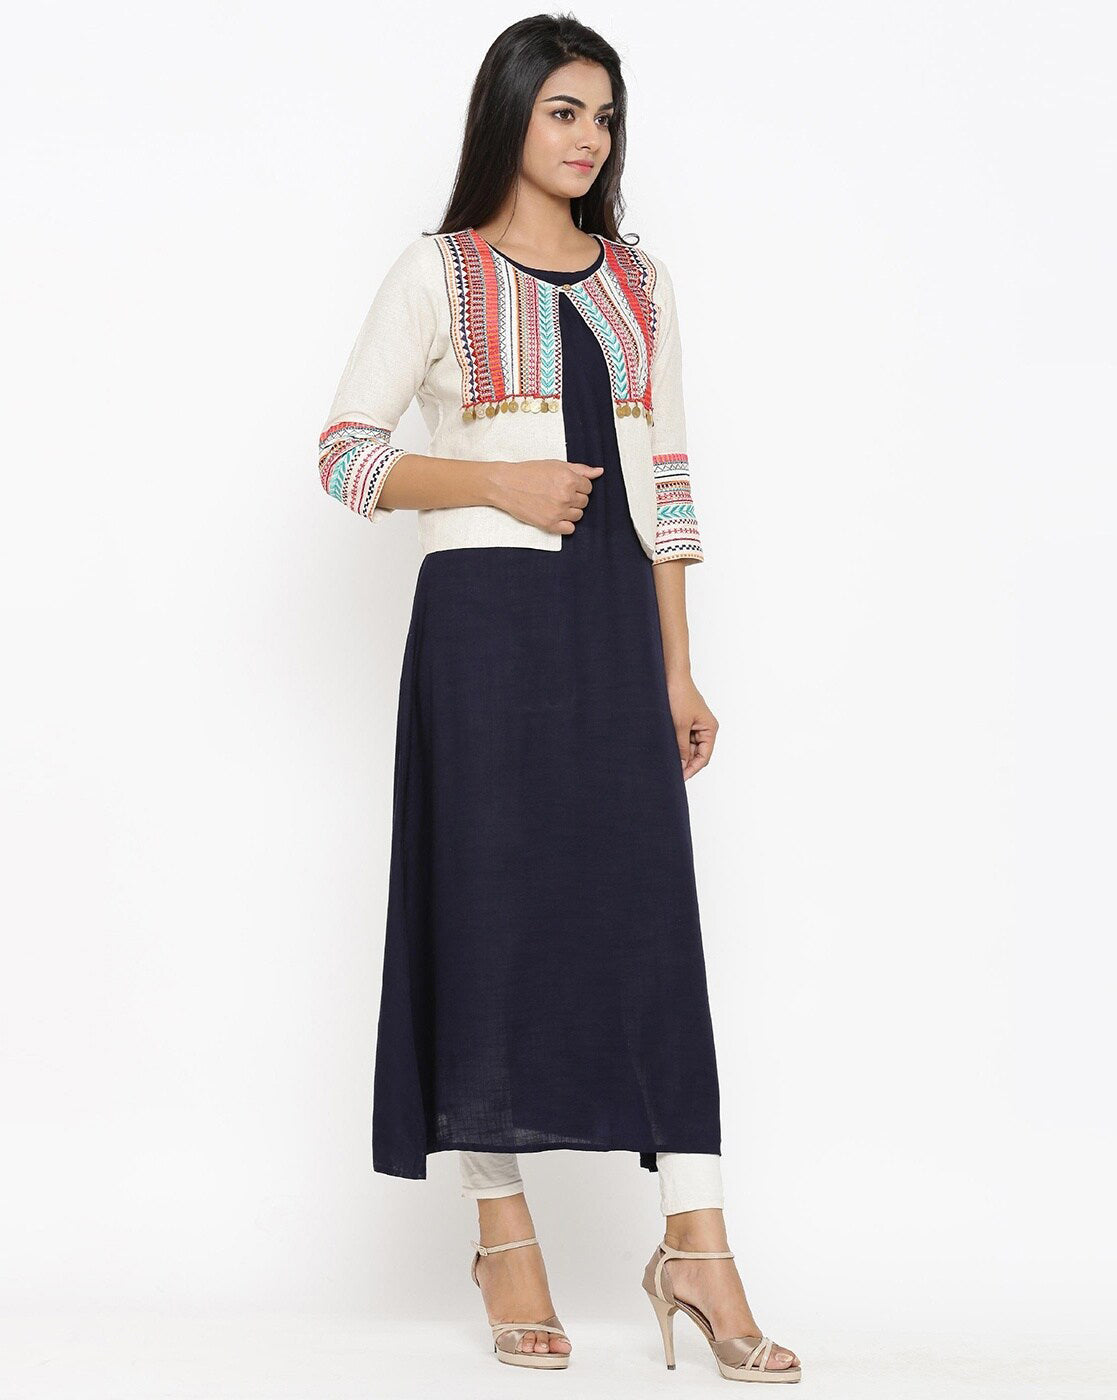 Khadi Jacket: White Timeless Elegance in Every Thread